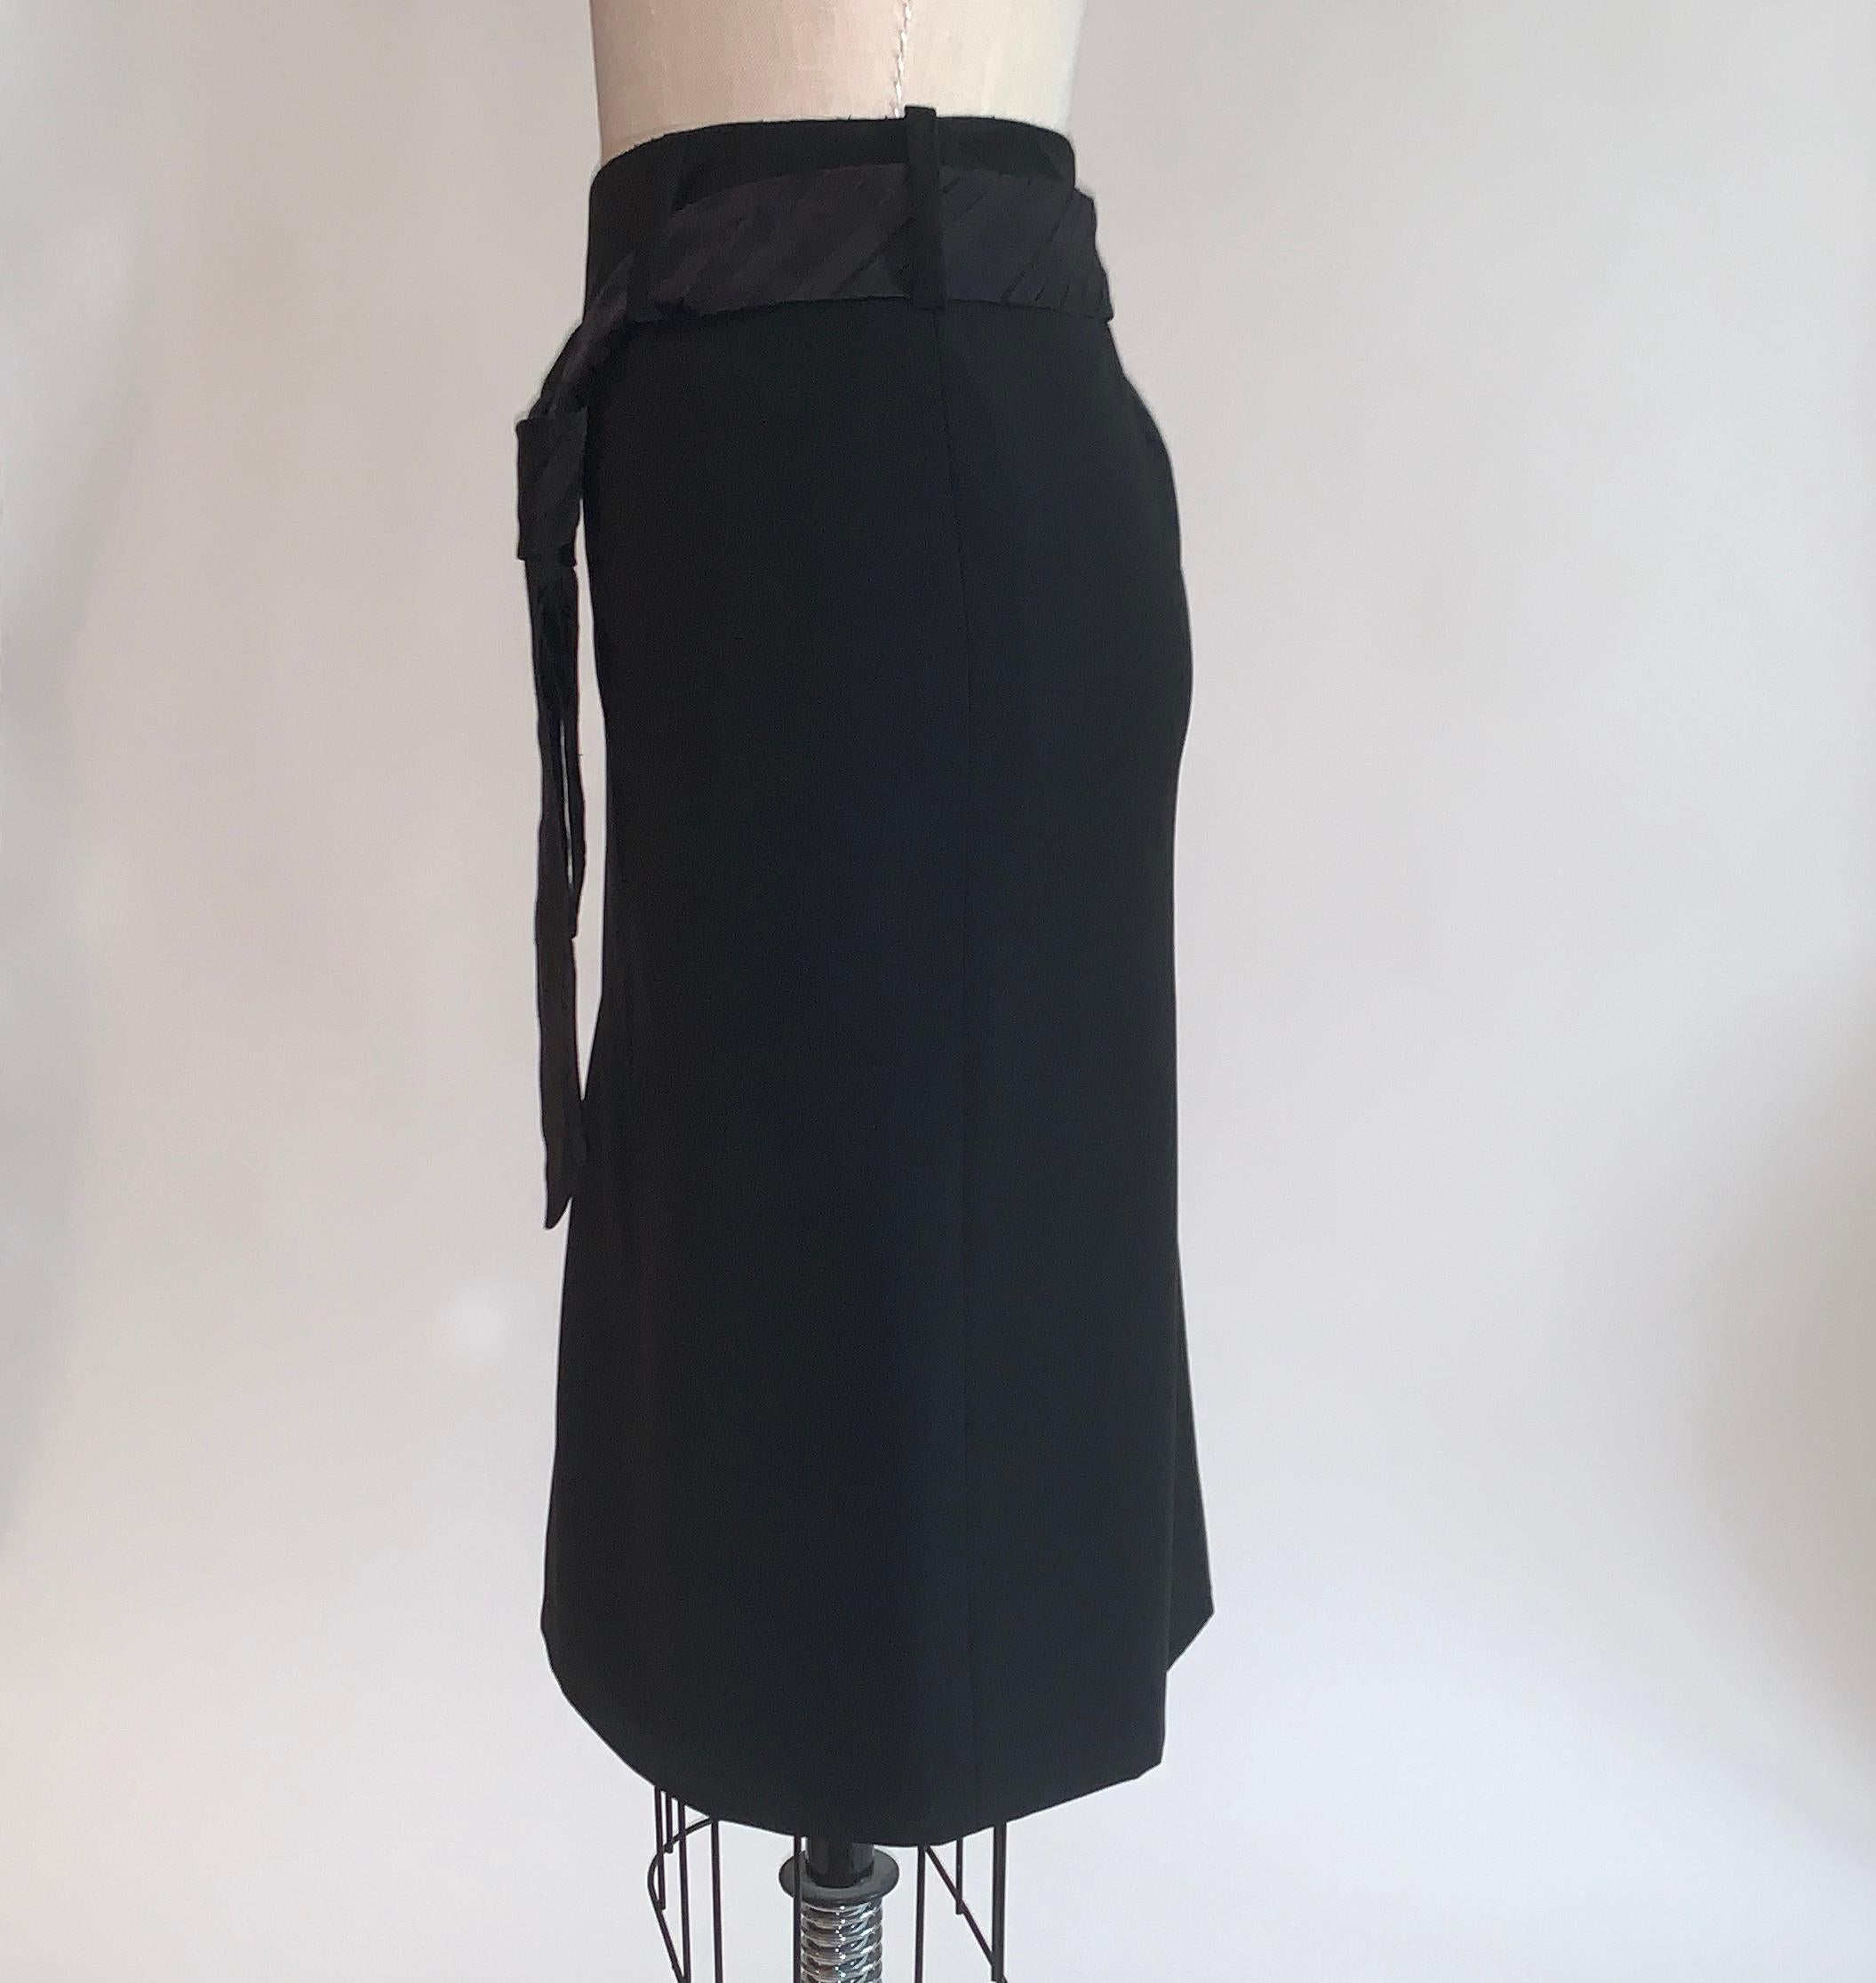 black pencil skirt with belt loops